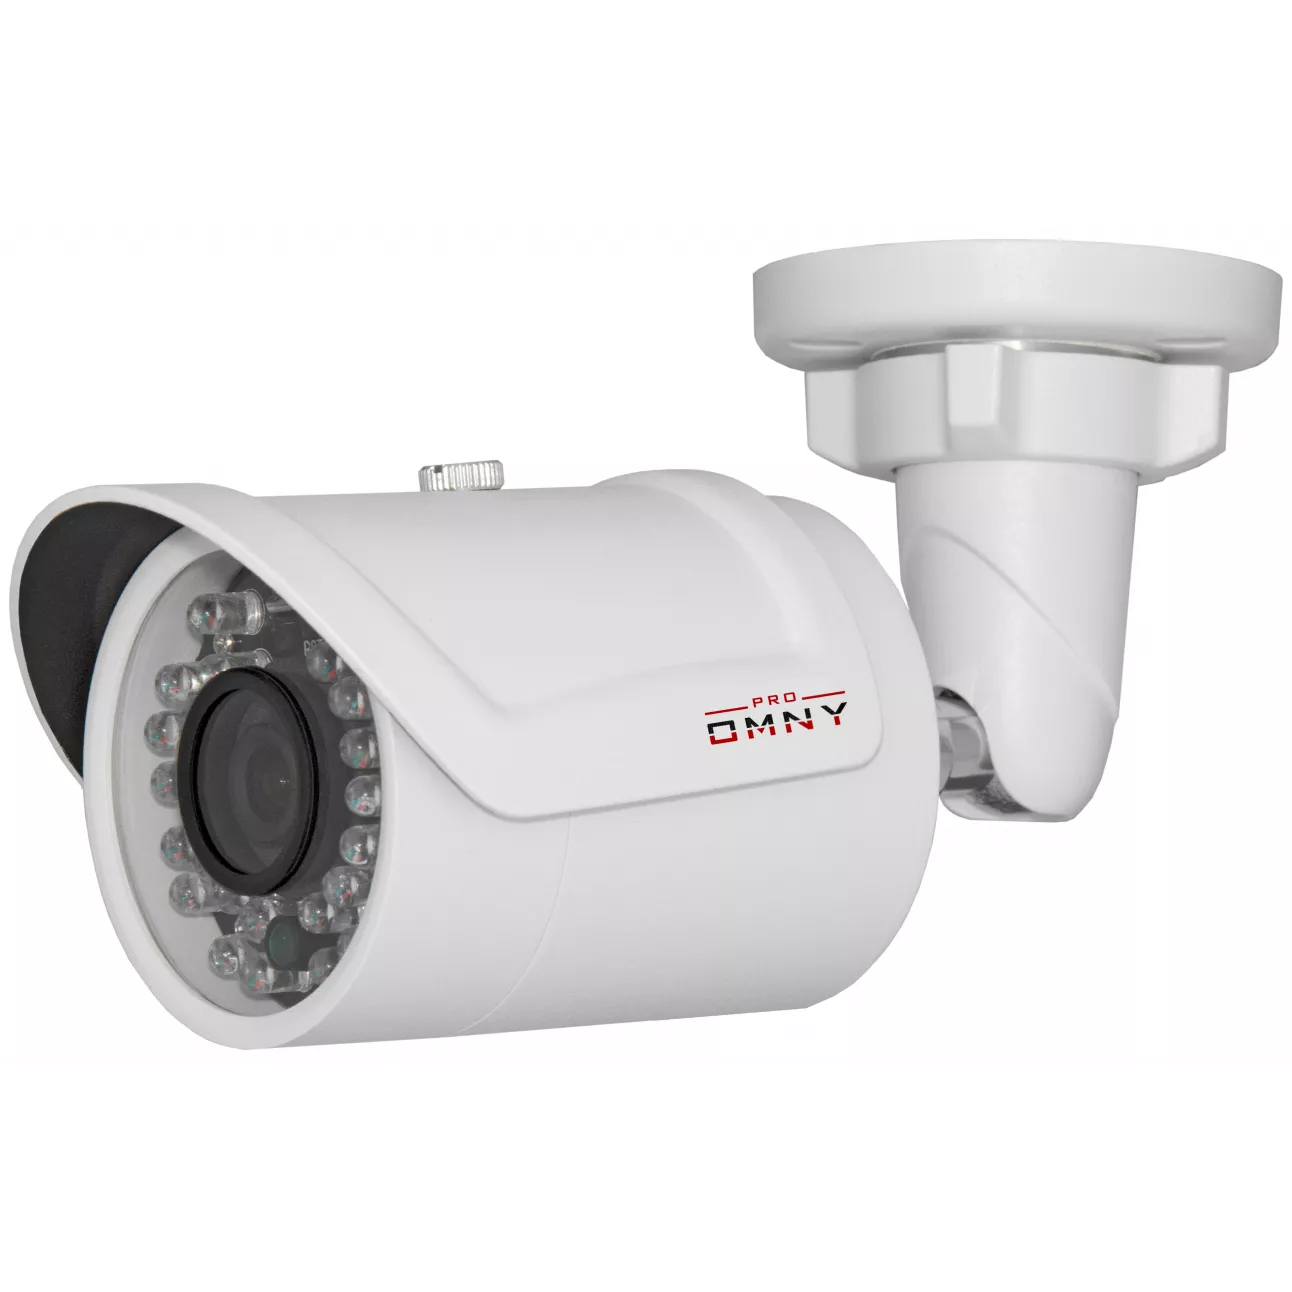 IP камера OMNY 500 PRO уличная мини 4Мп, c ИК подсветкой, 6мм, PoE,12В, SD карта